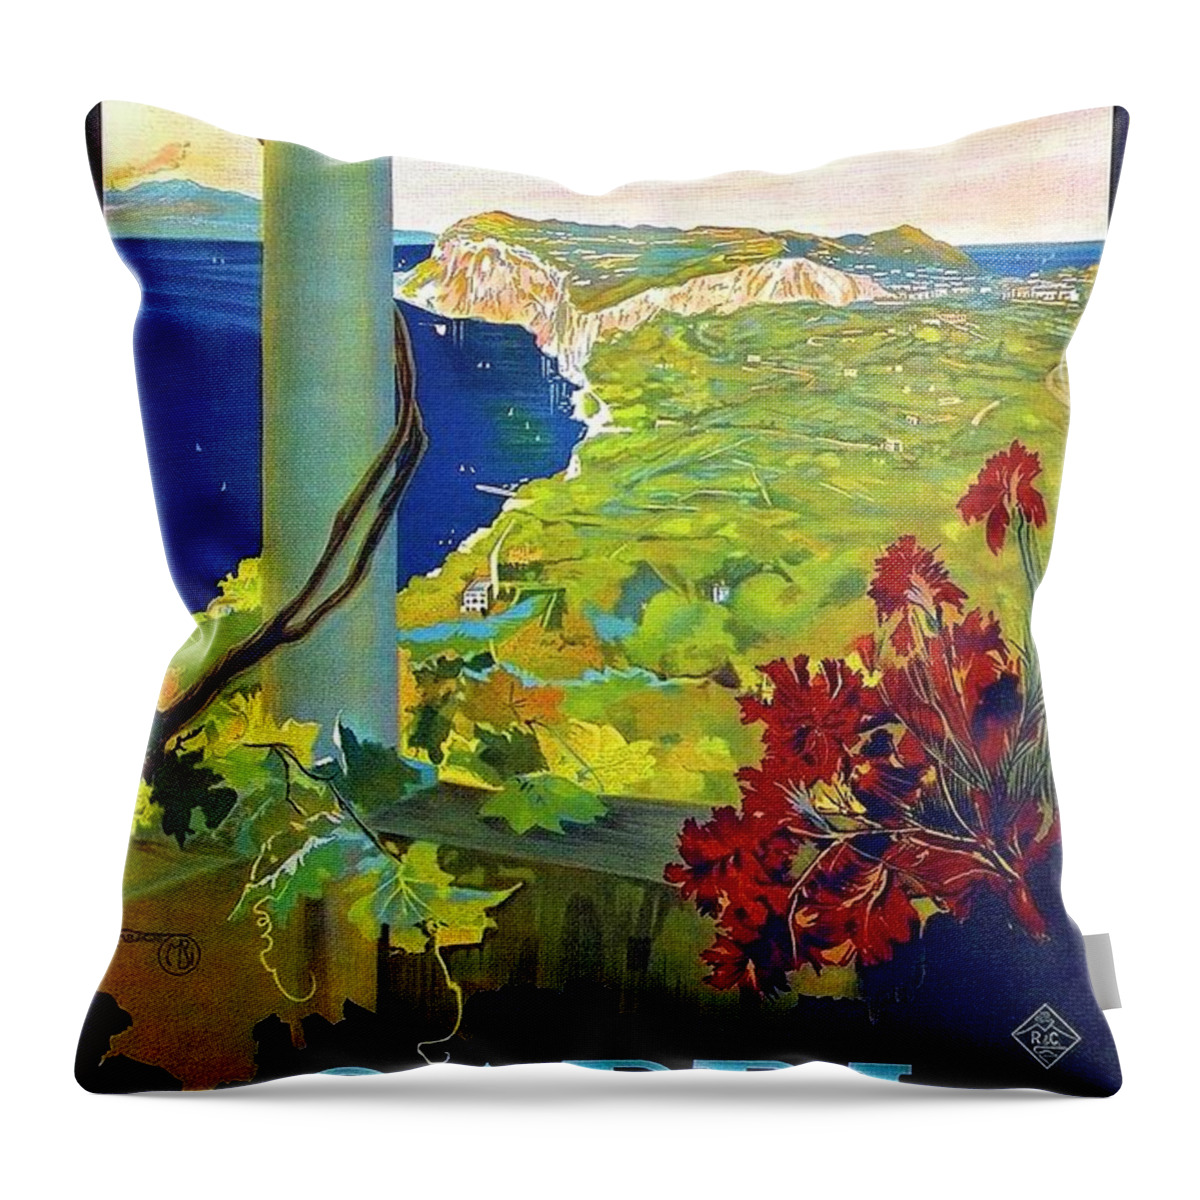 Capri Throw Pillow featuring the painting Capri, Italy, Italian riviera, scenery by Long Shot